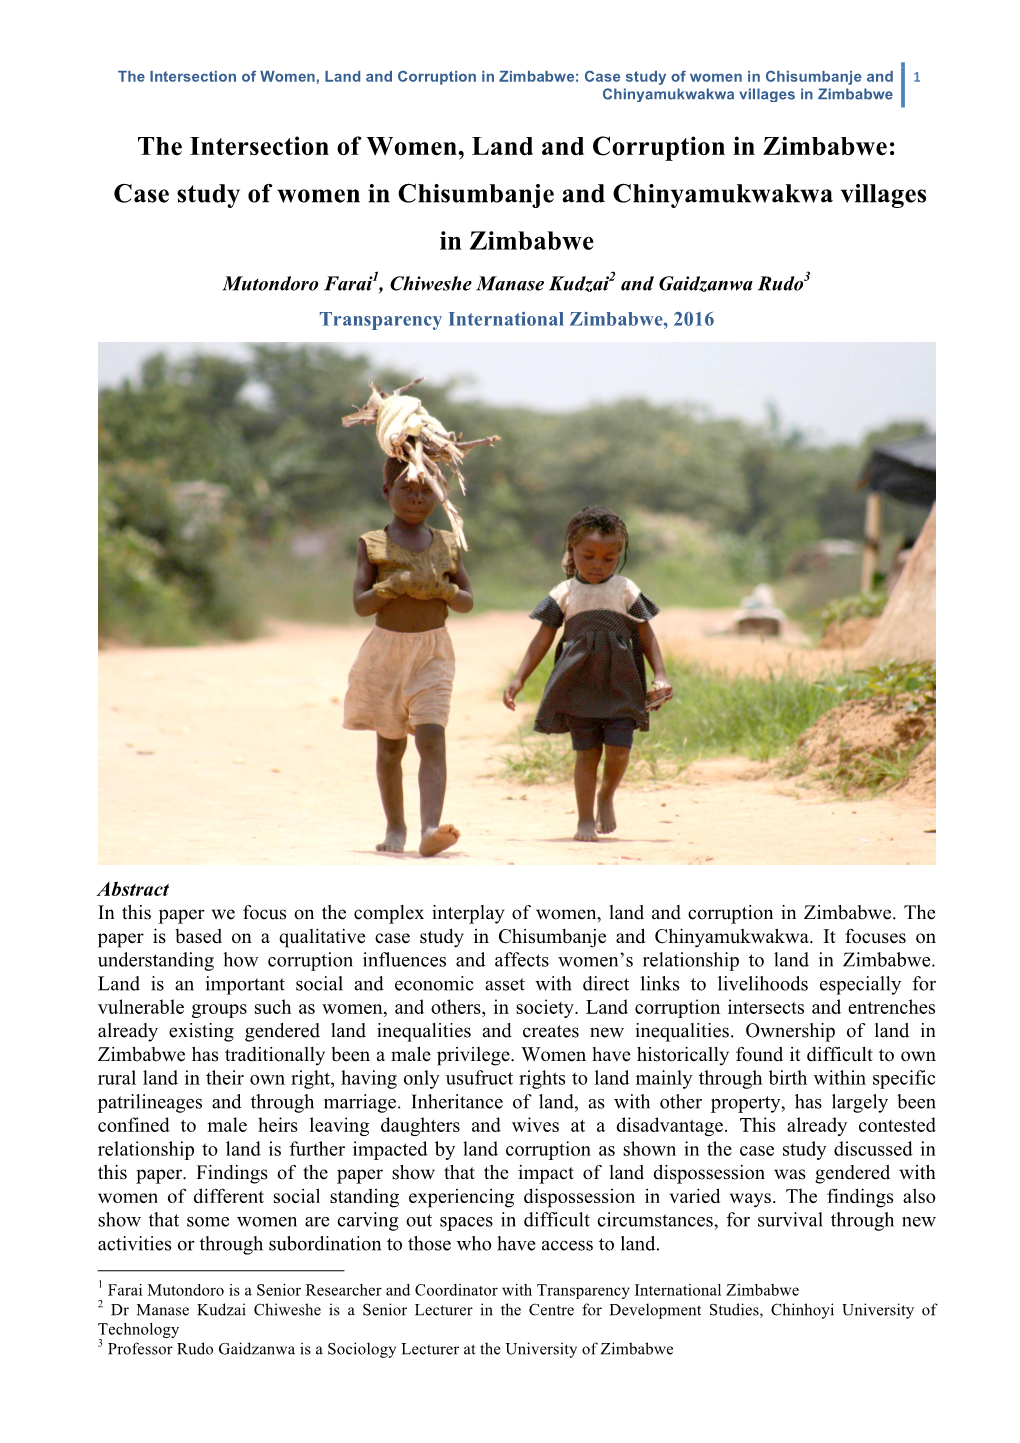 The Intersection of Women, Land and Corruption in Zimbabwe: Case Study of Women in Chisumbanje and 1 Chinyamukwakwa Villages in Zimbabwe